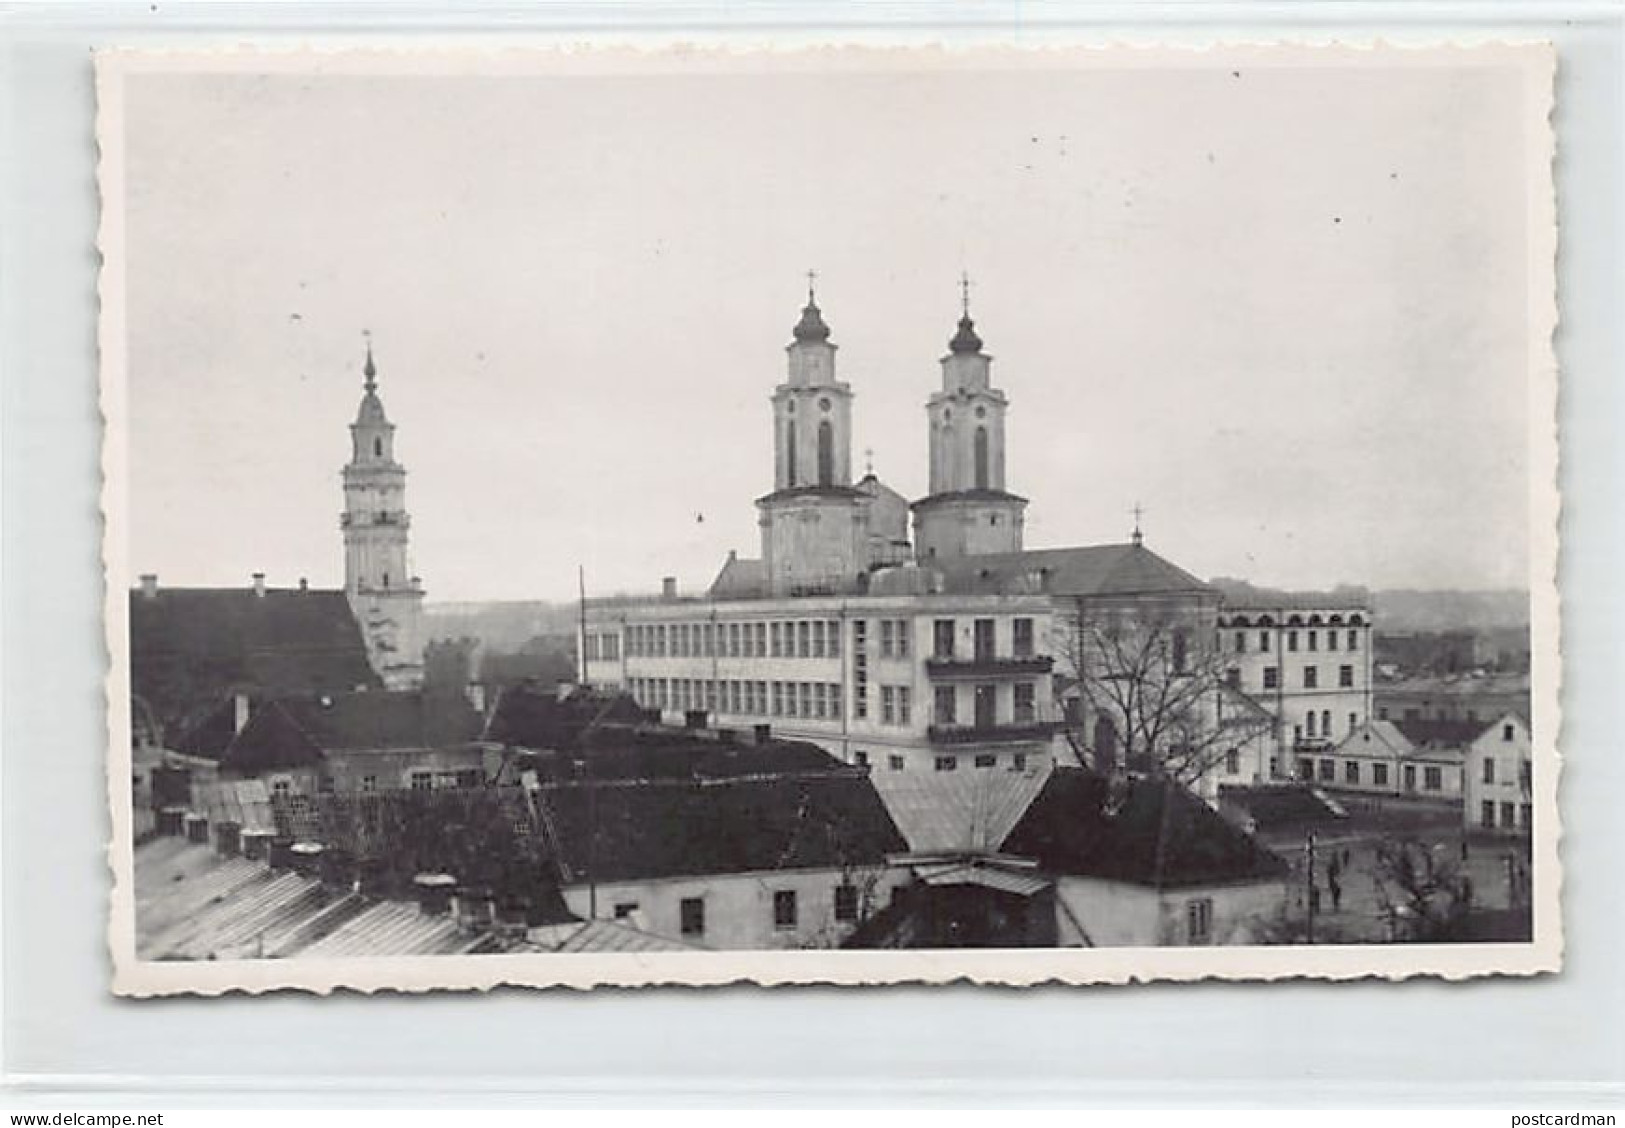 Lithuania - KAUNAS - St. Stanislas Church Of The Jesuits' College - Aerial View - REAL PHOTO  - Lituanie